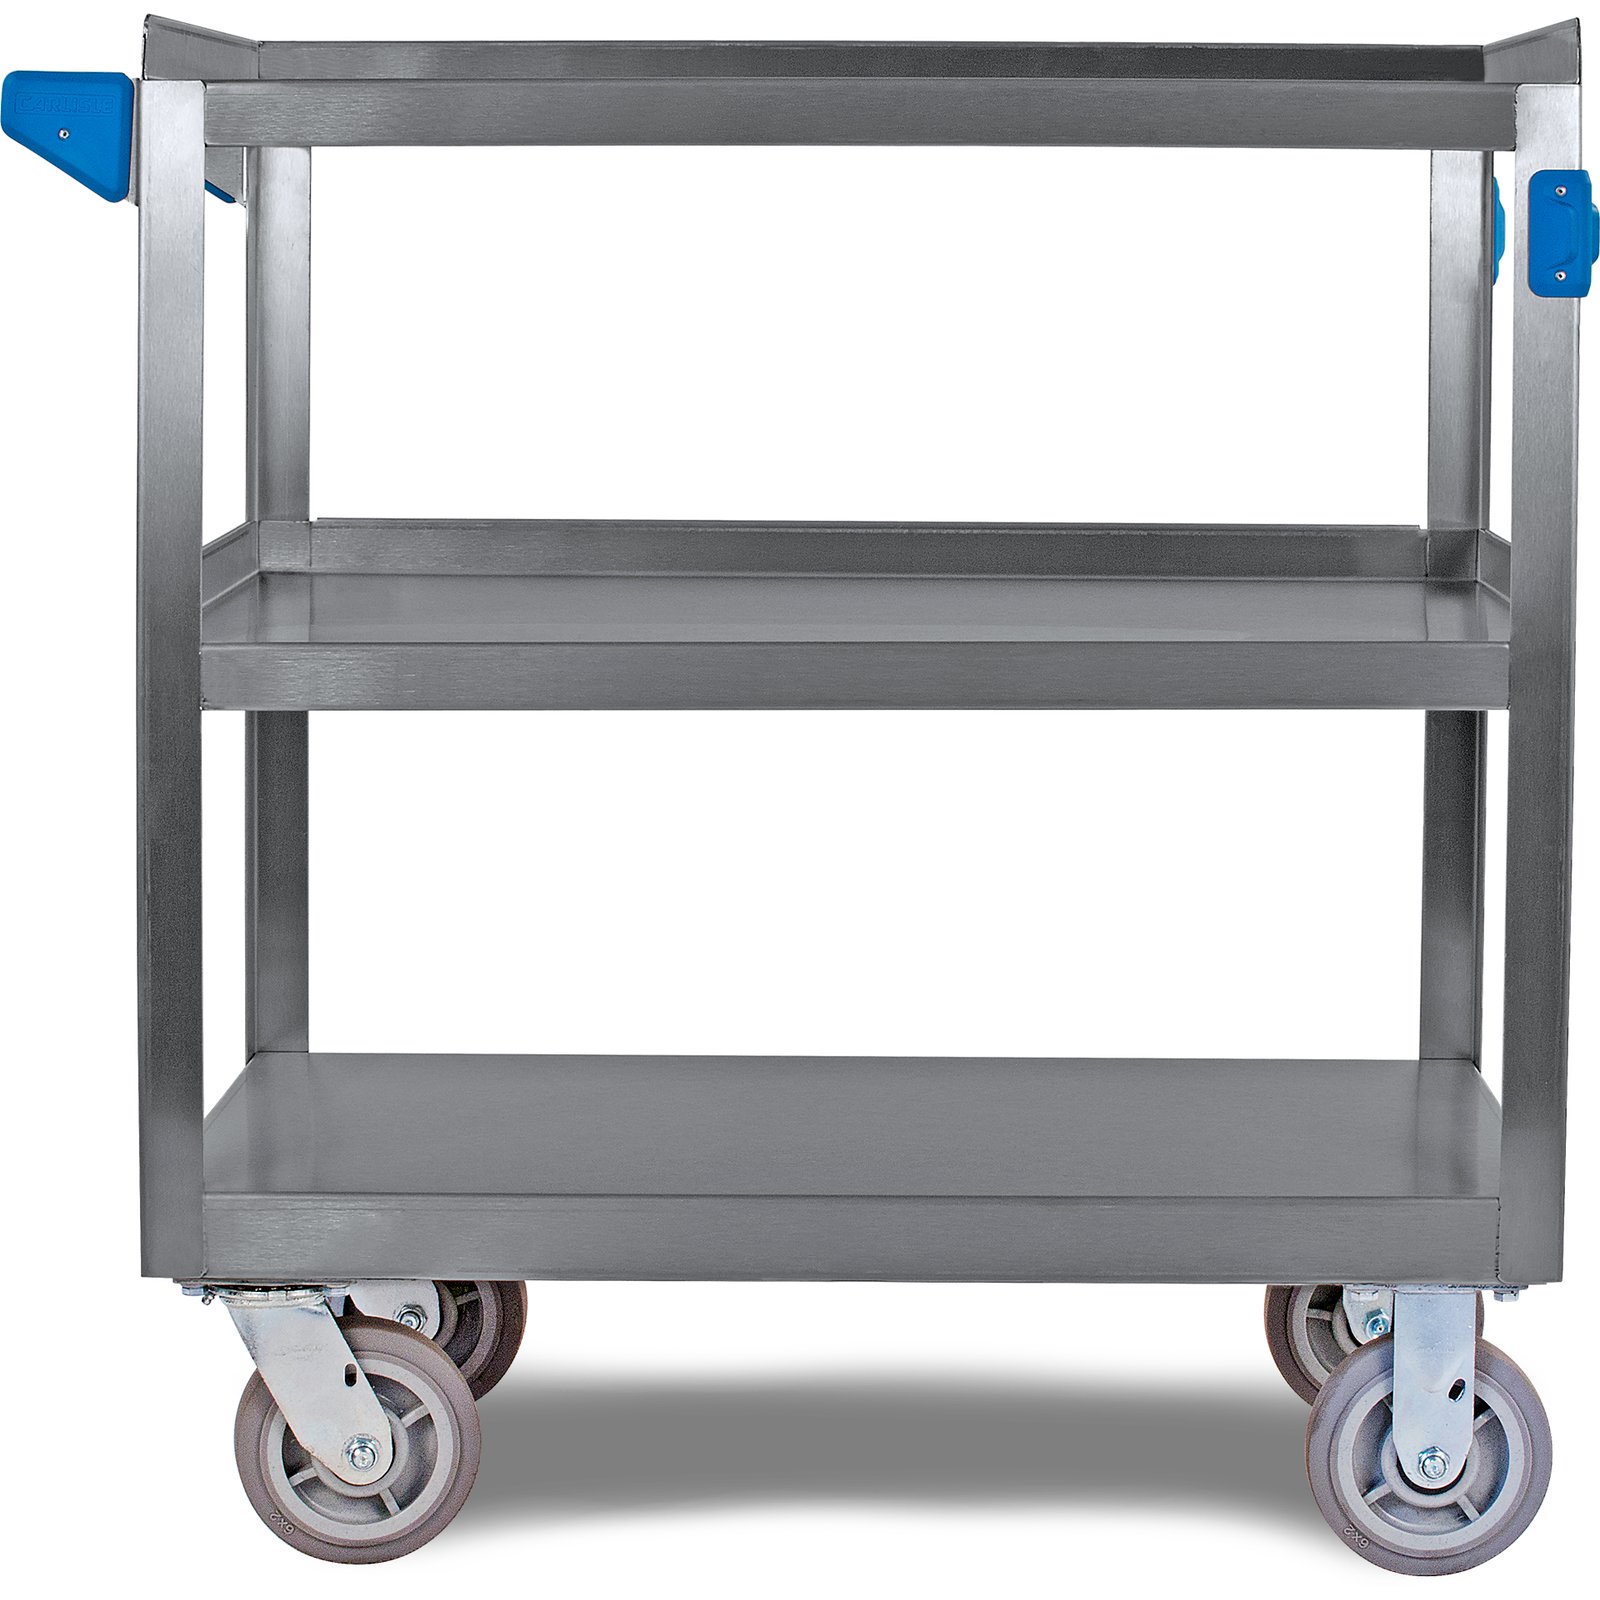 UC7032133 - Stainless Steel 3 Shelf Utility Cart 21 x 33